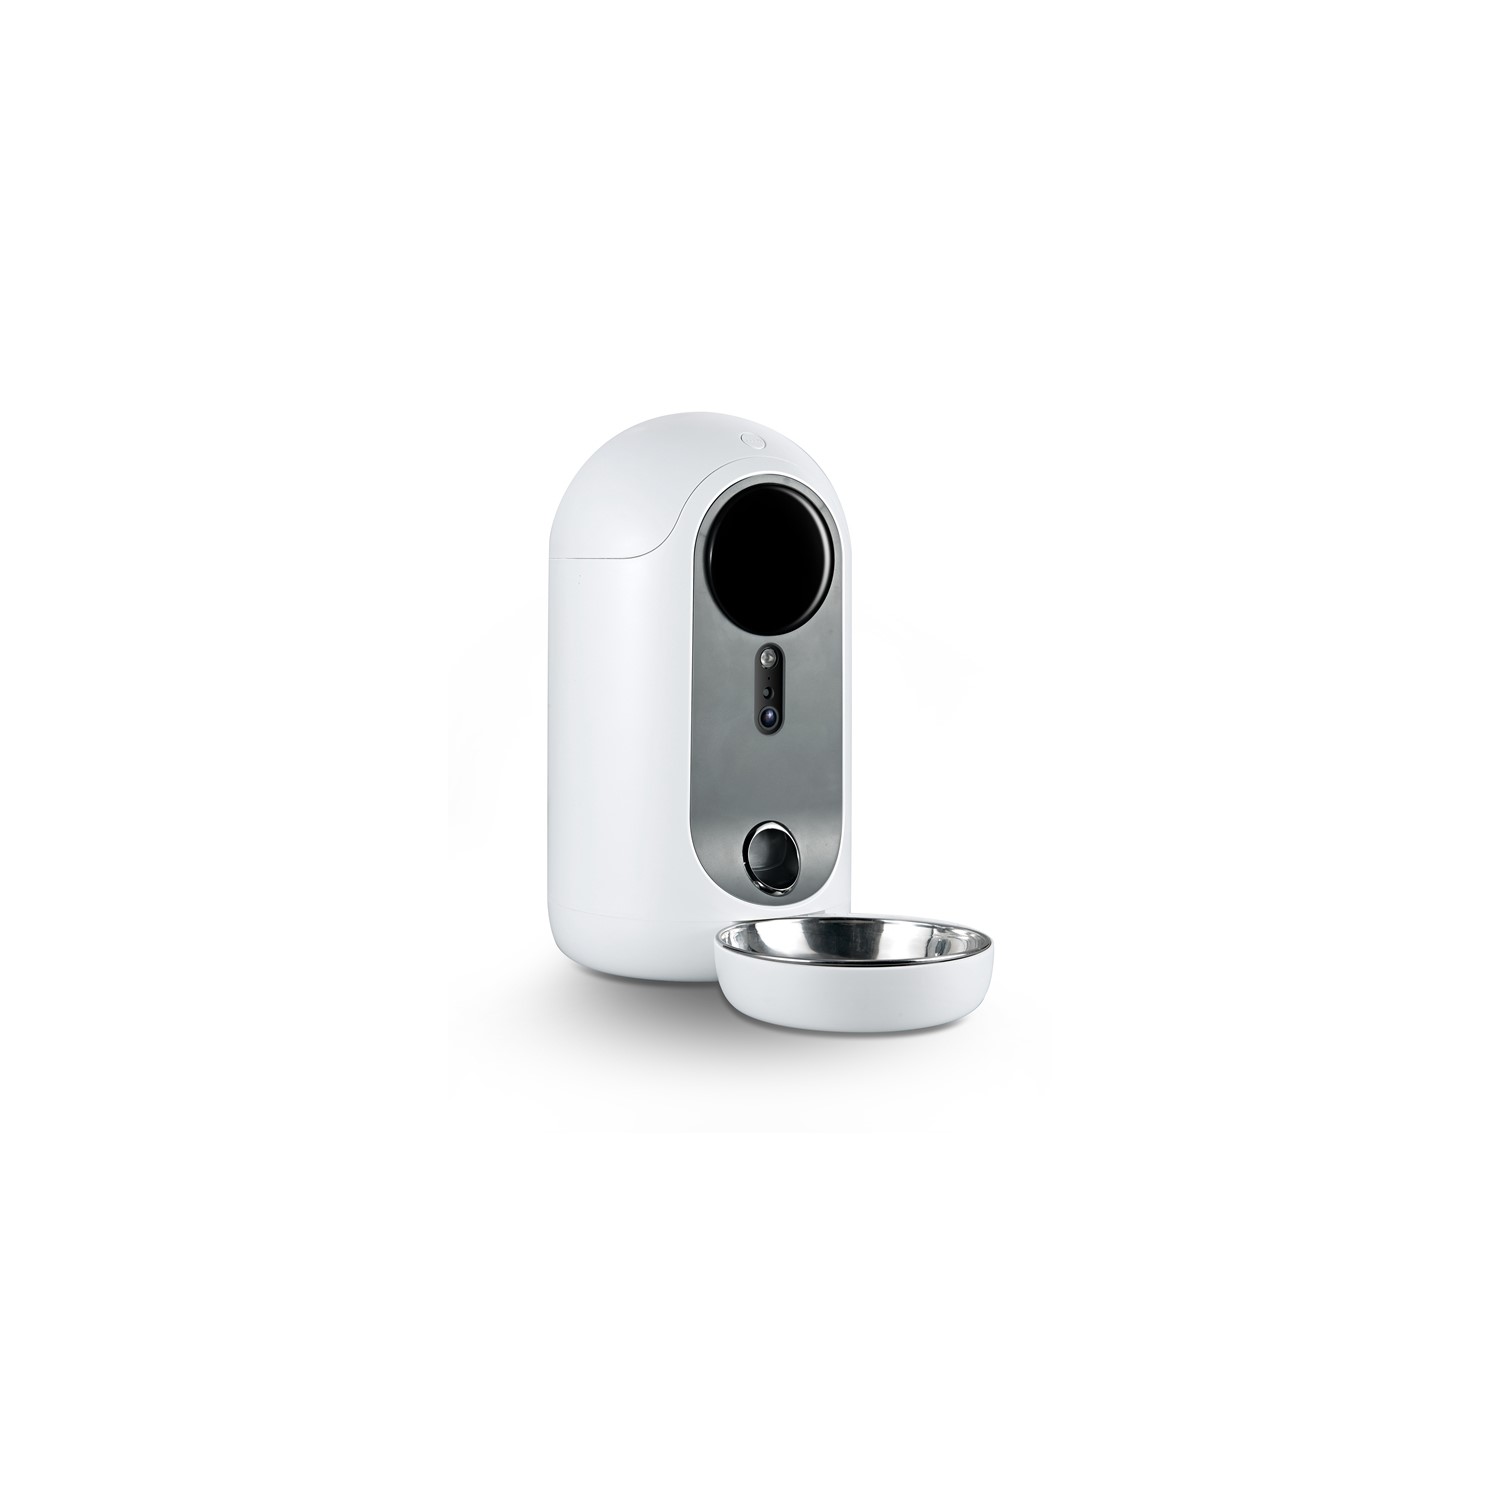 Smart Wifi Automatic Pet Feeder 1080p camera & 2 way audio